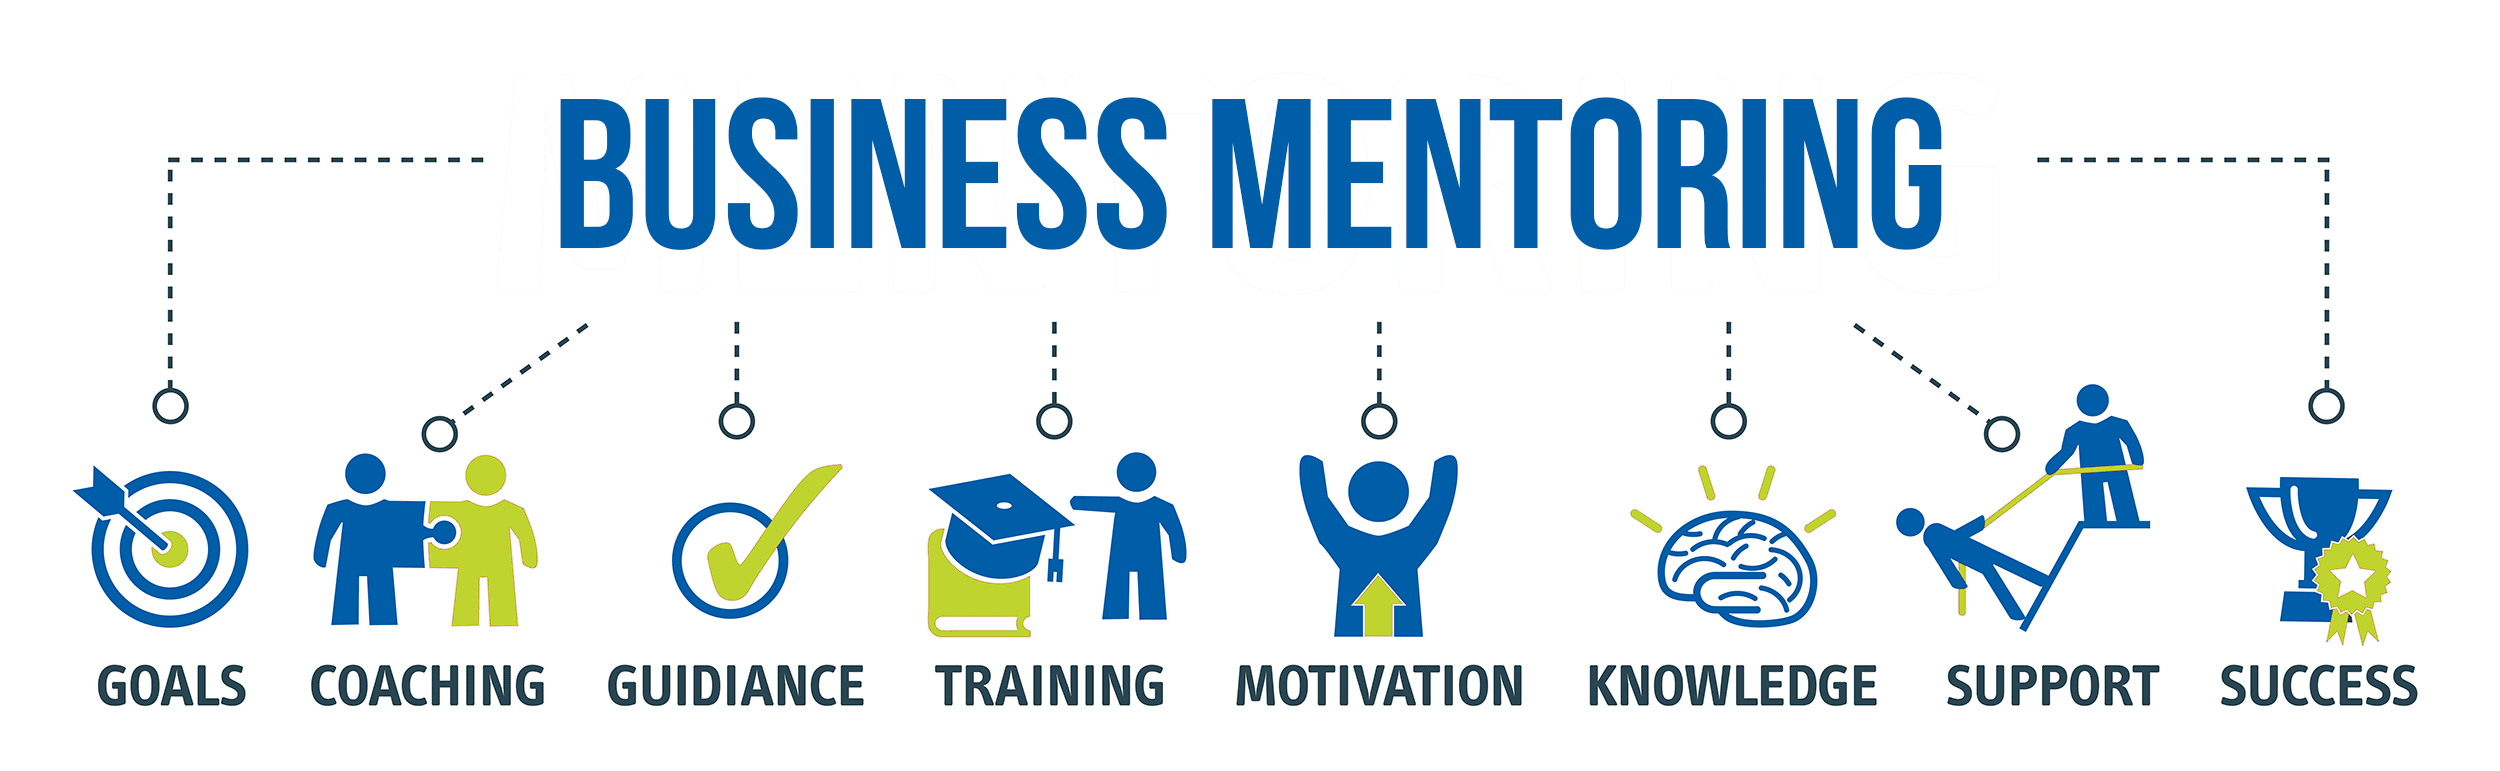 business mentoring banner